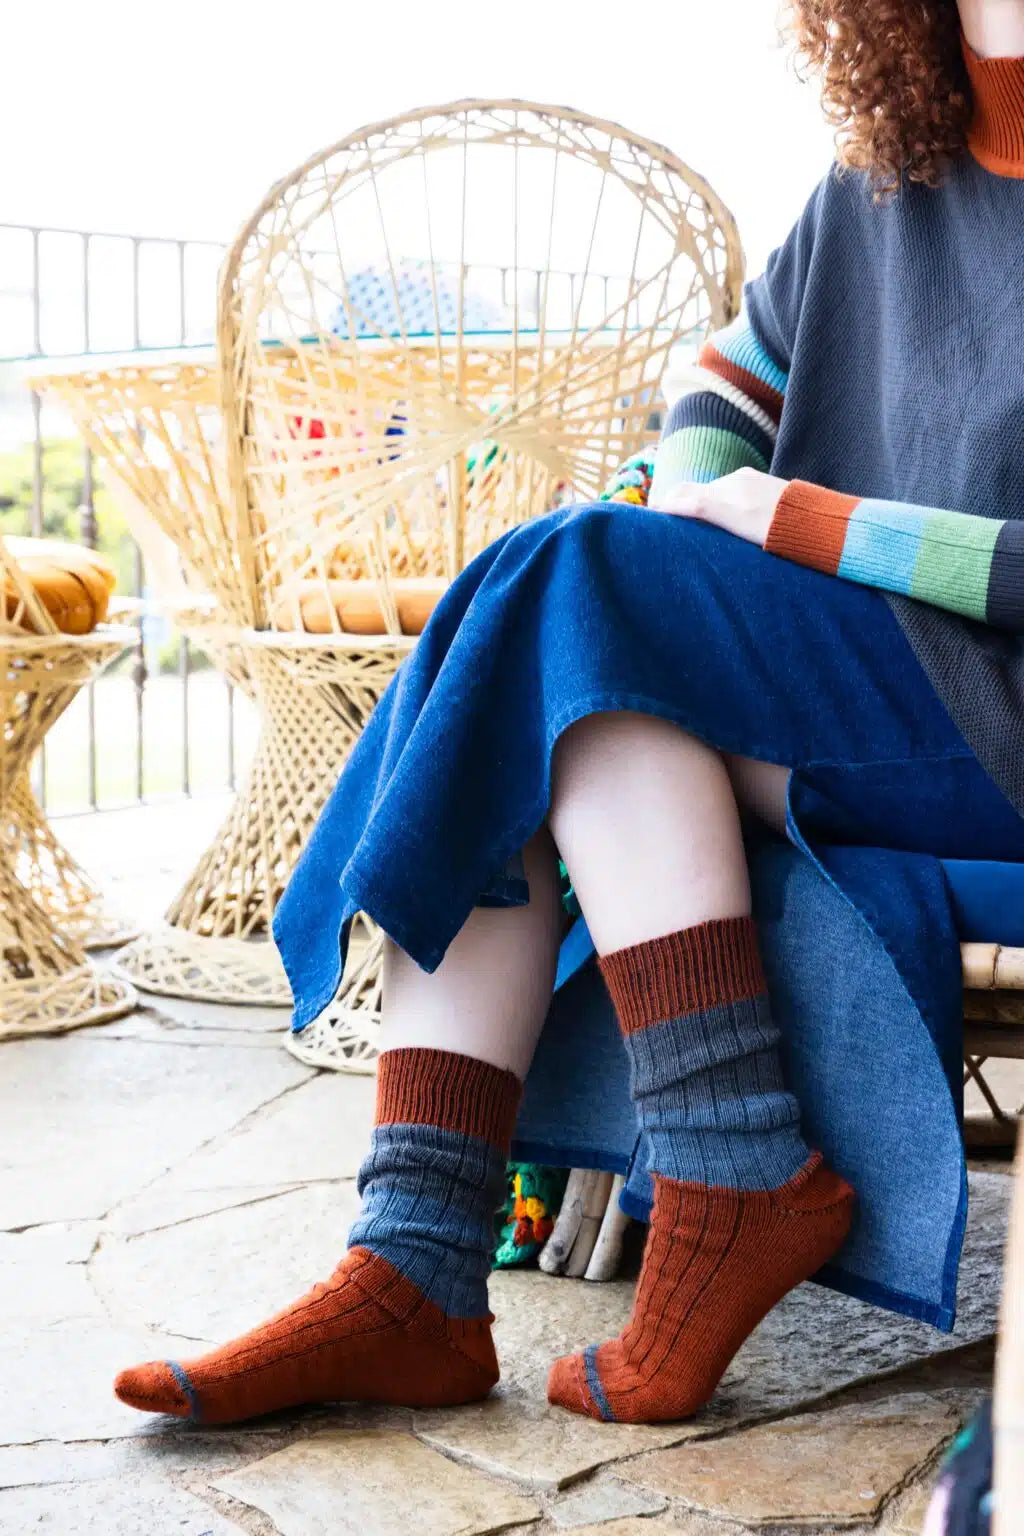 Tightology ‘Chunky Rib’ Rust Stripe Merino Wool Socks